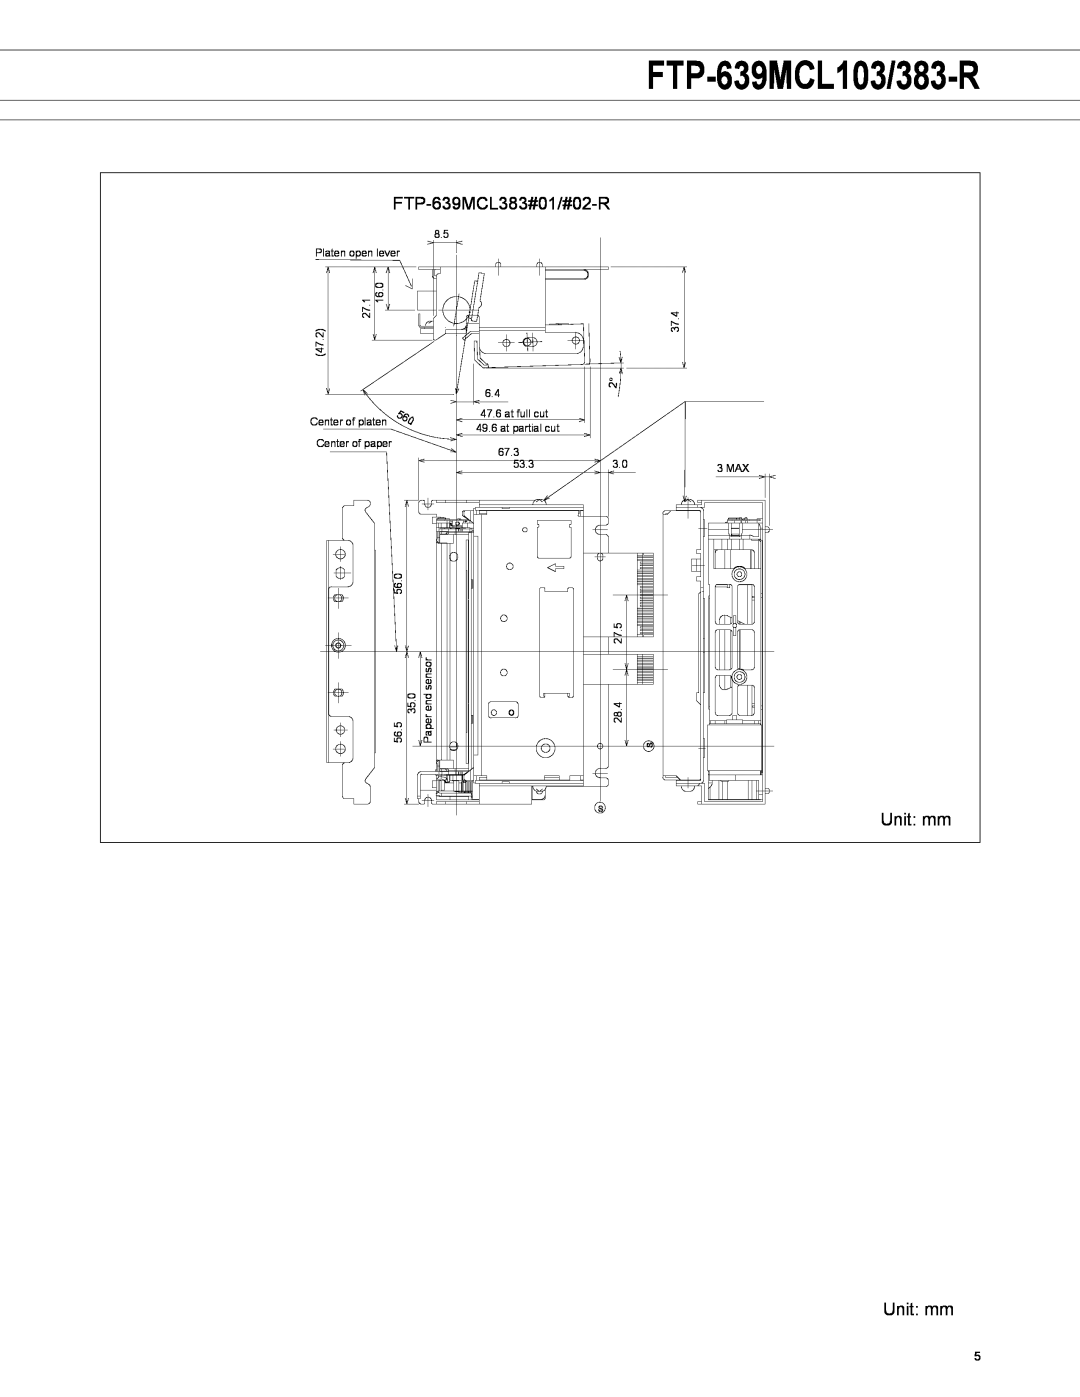 Fujitsu FTP-639MCL103/383-R Platen open lever, 47.2, 27. 6.0, 37.4, Center of platen Center of paper, 67.3, 53.3, 3 MAX 